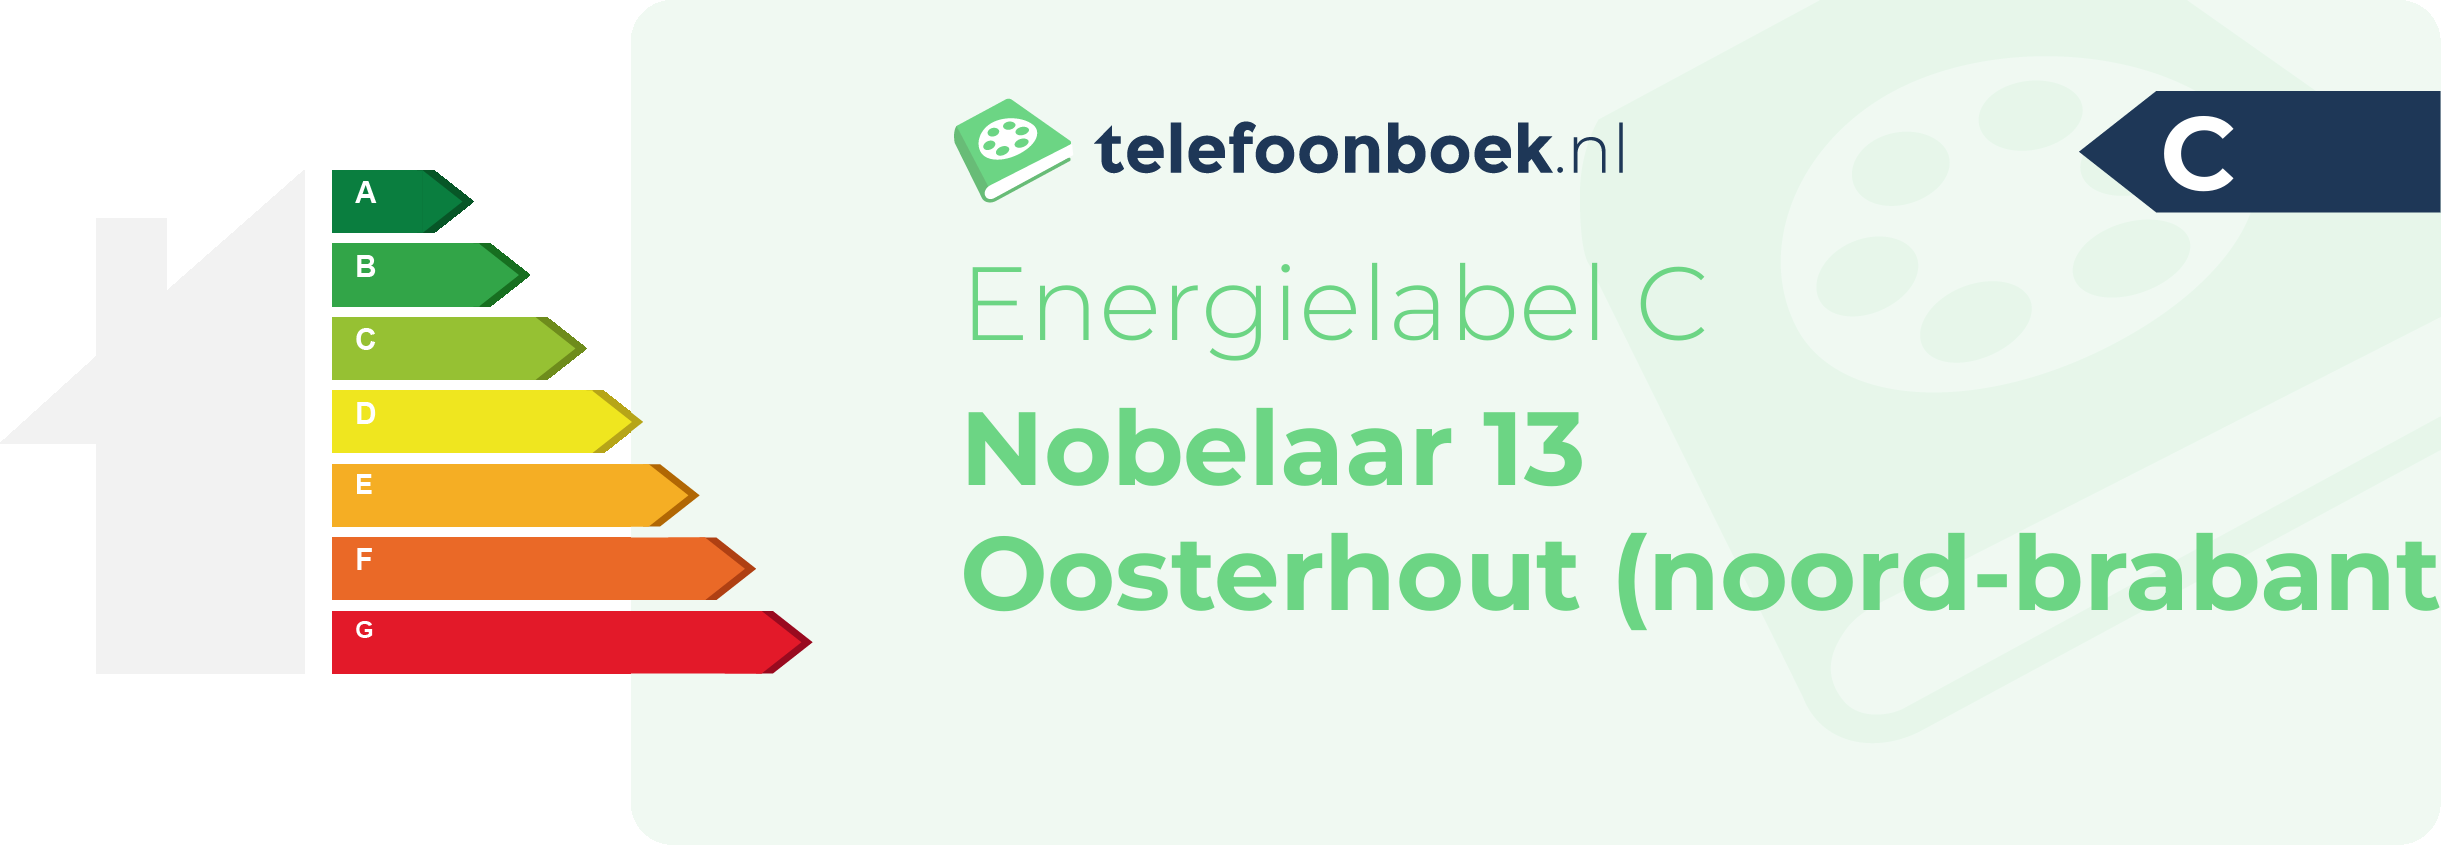 Energielabel Nobelaar 13 Oosterhout (Noord-Brabant)